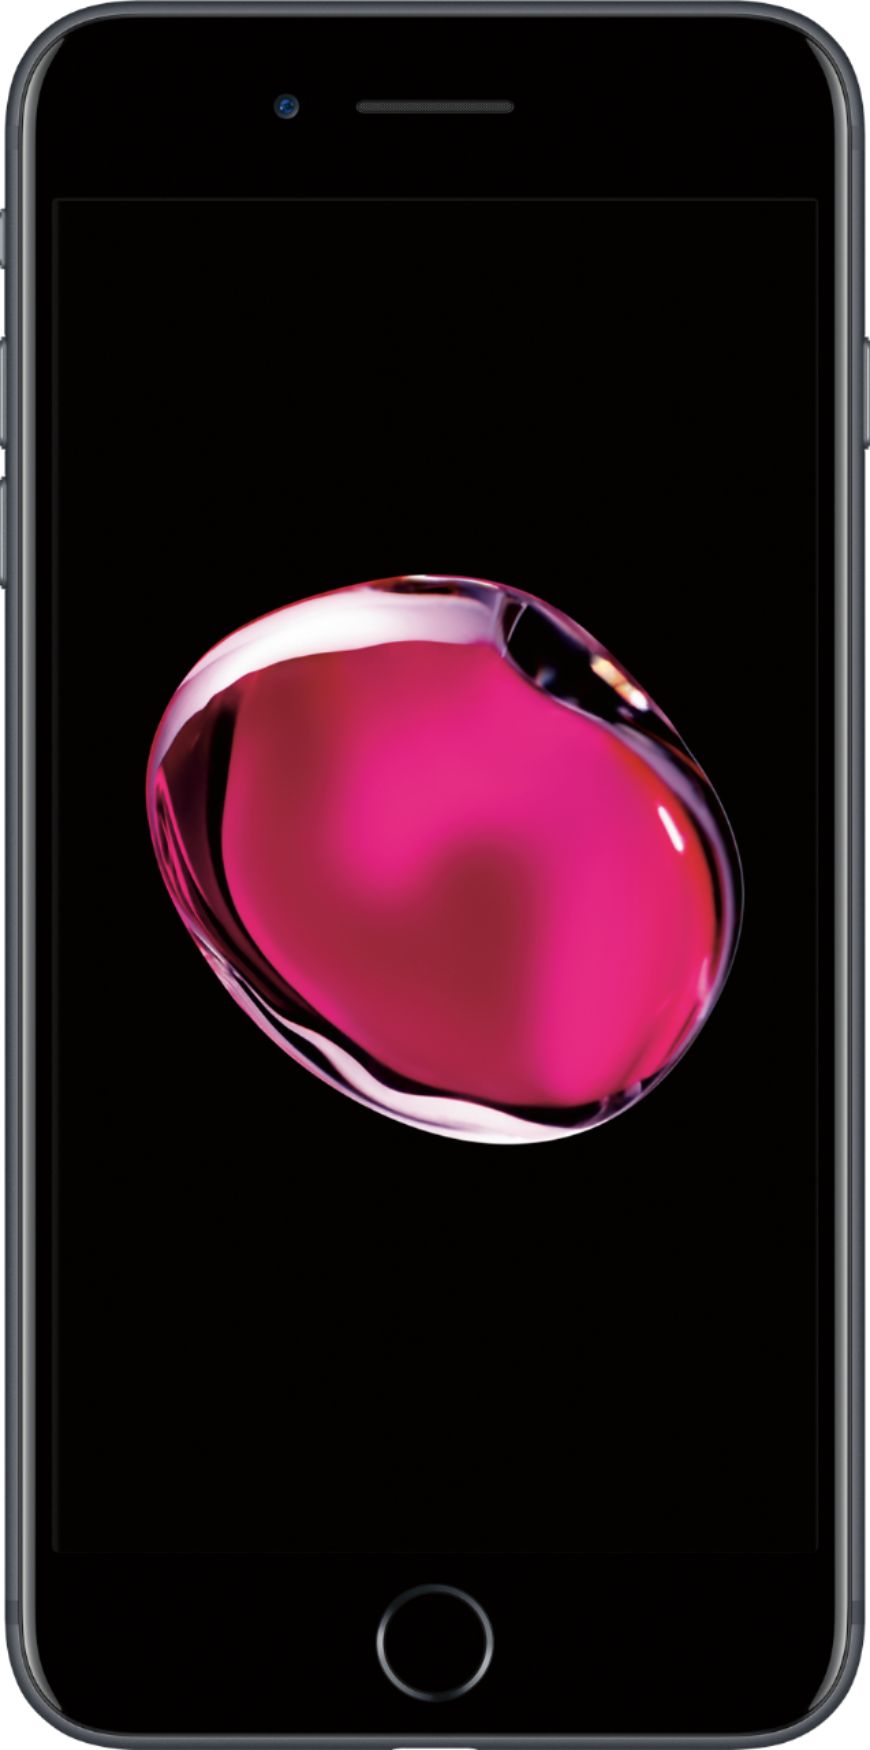 Apple iPhone 7 Plus 32GB Black (Verizon) MNQH2LL/A - Best Buy